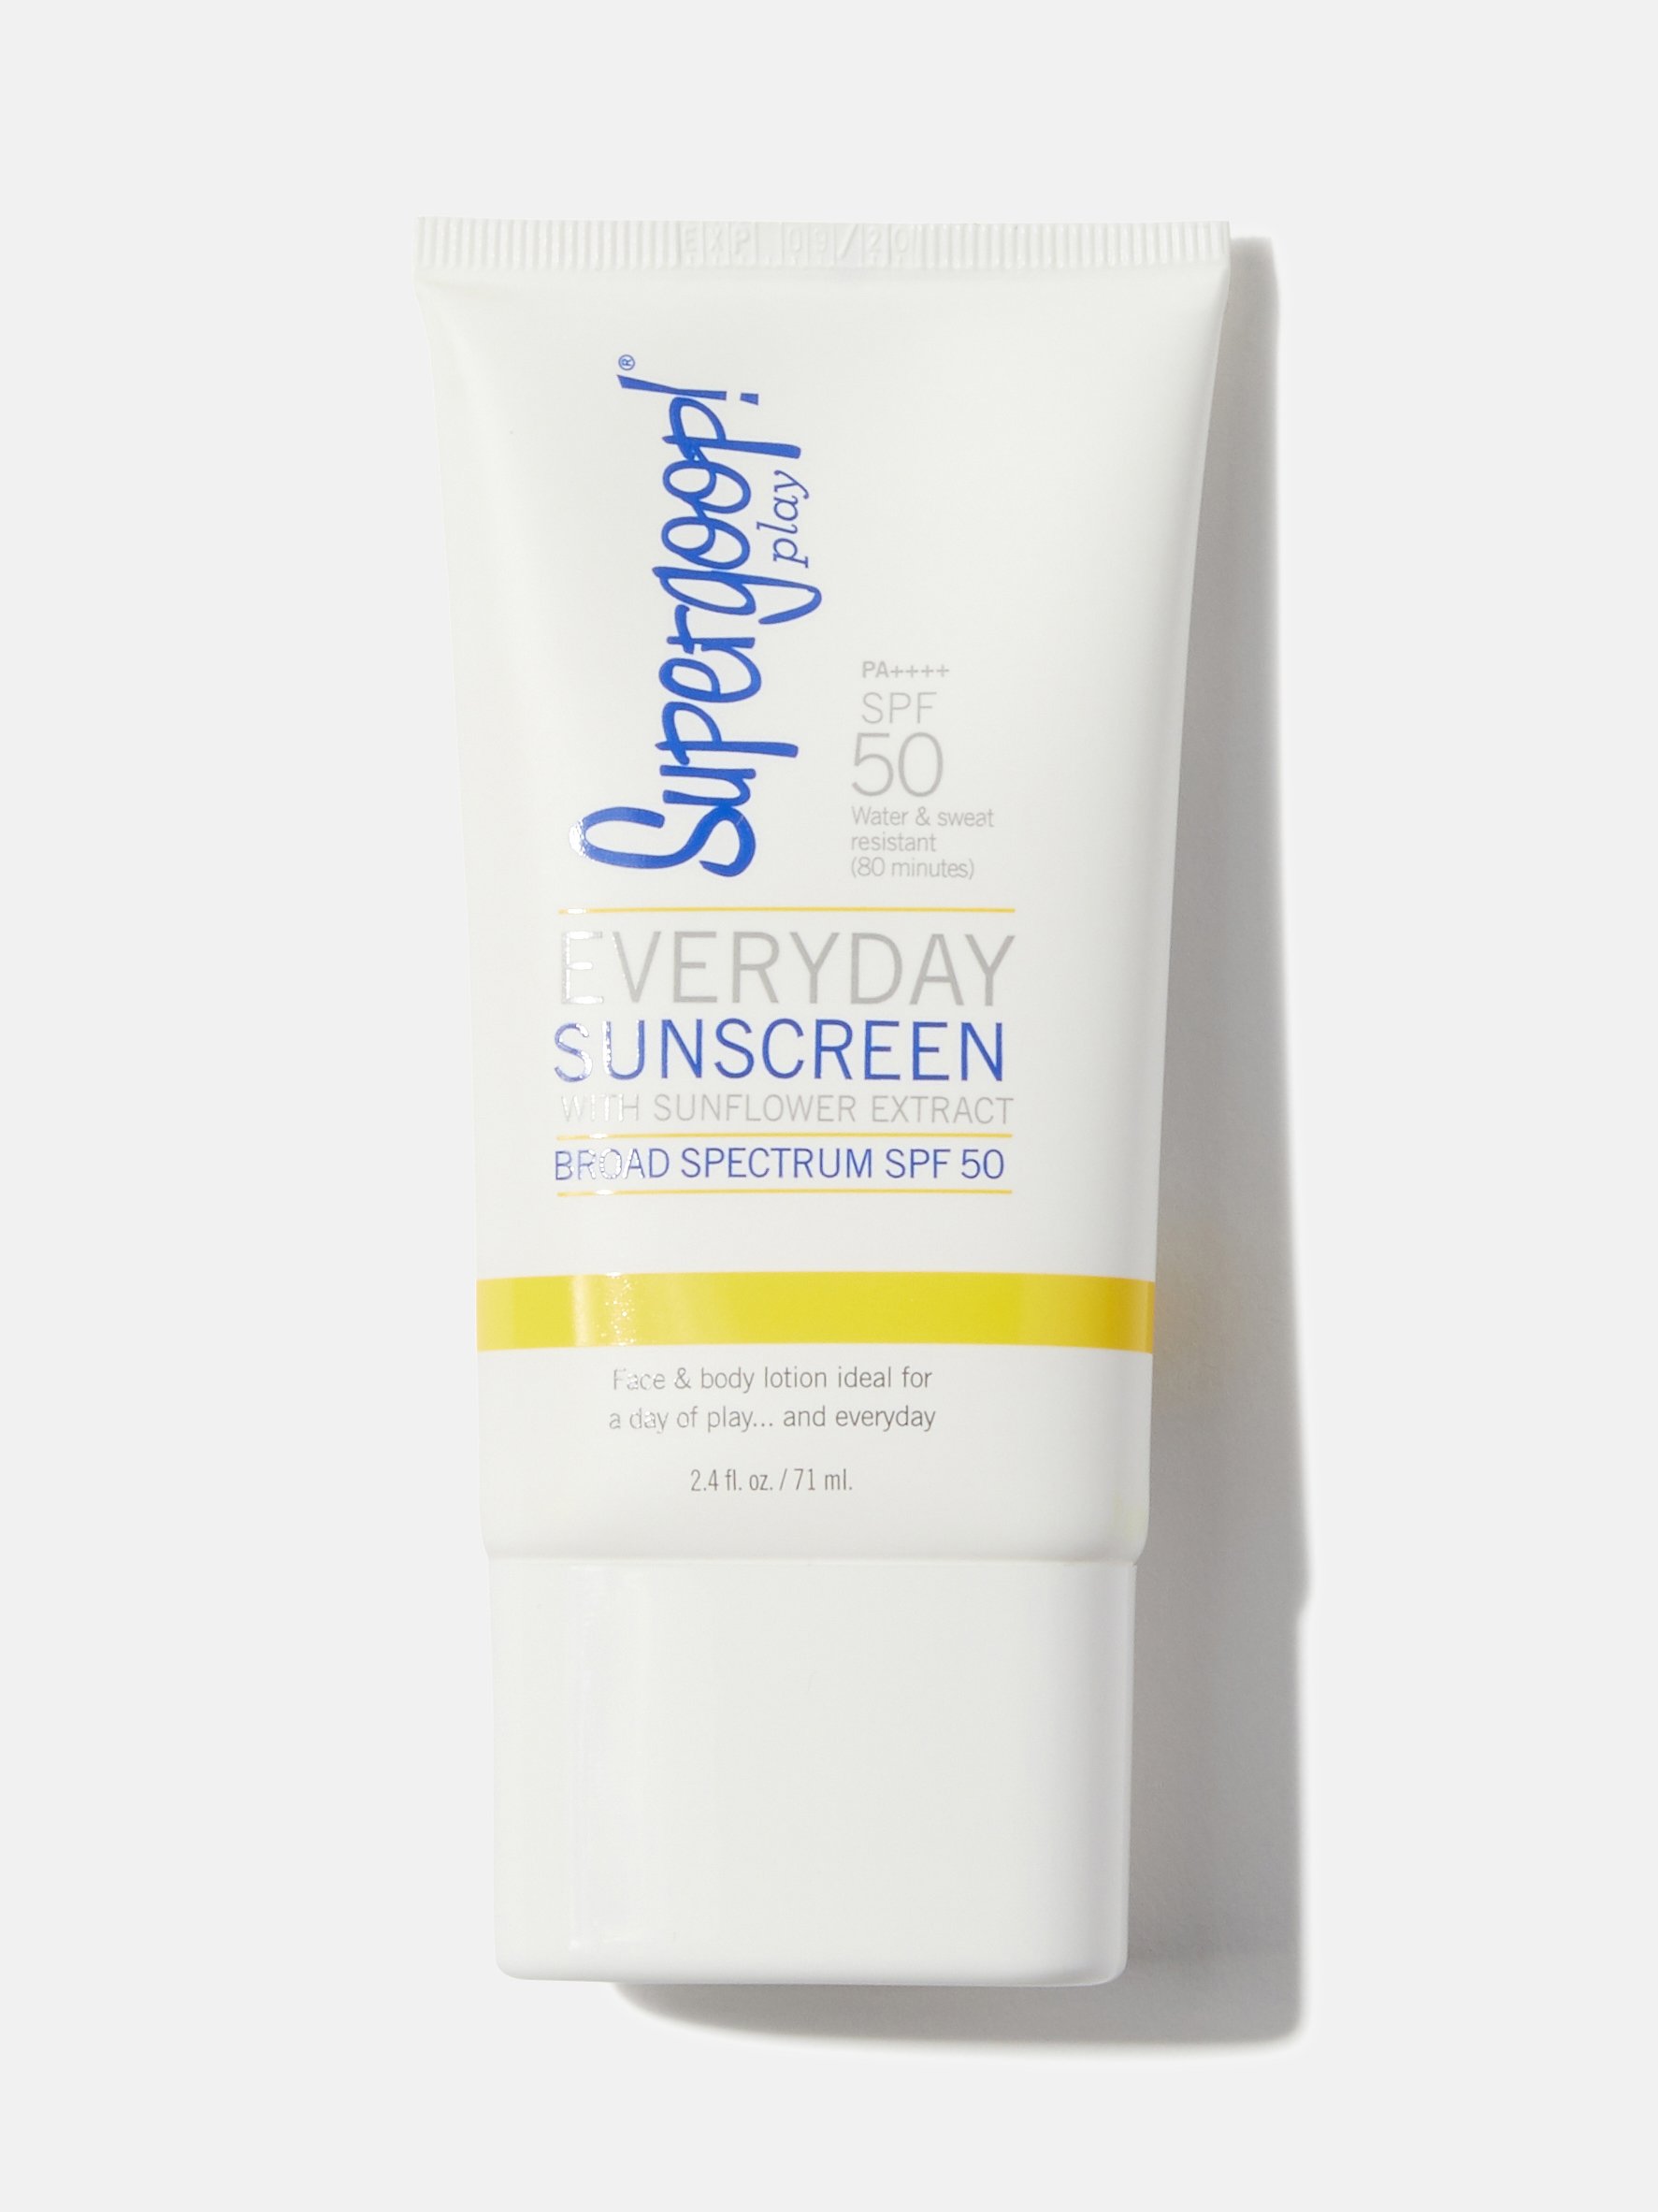 supergoop sunscreen in stores